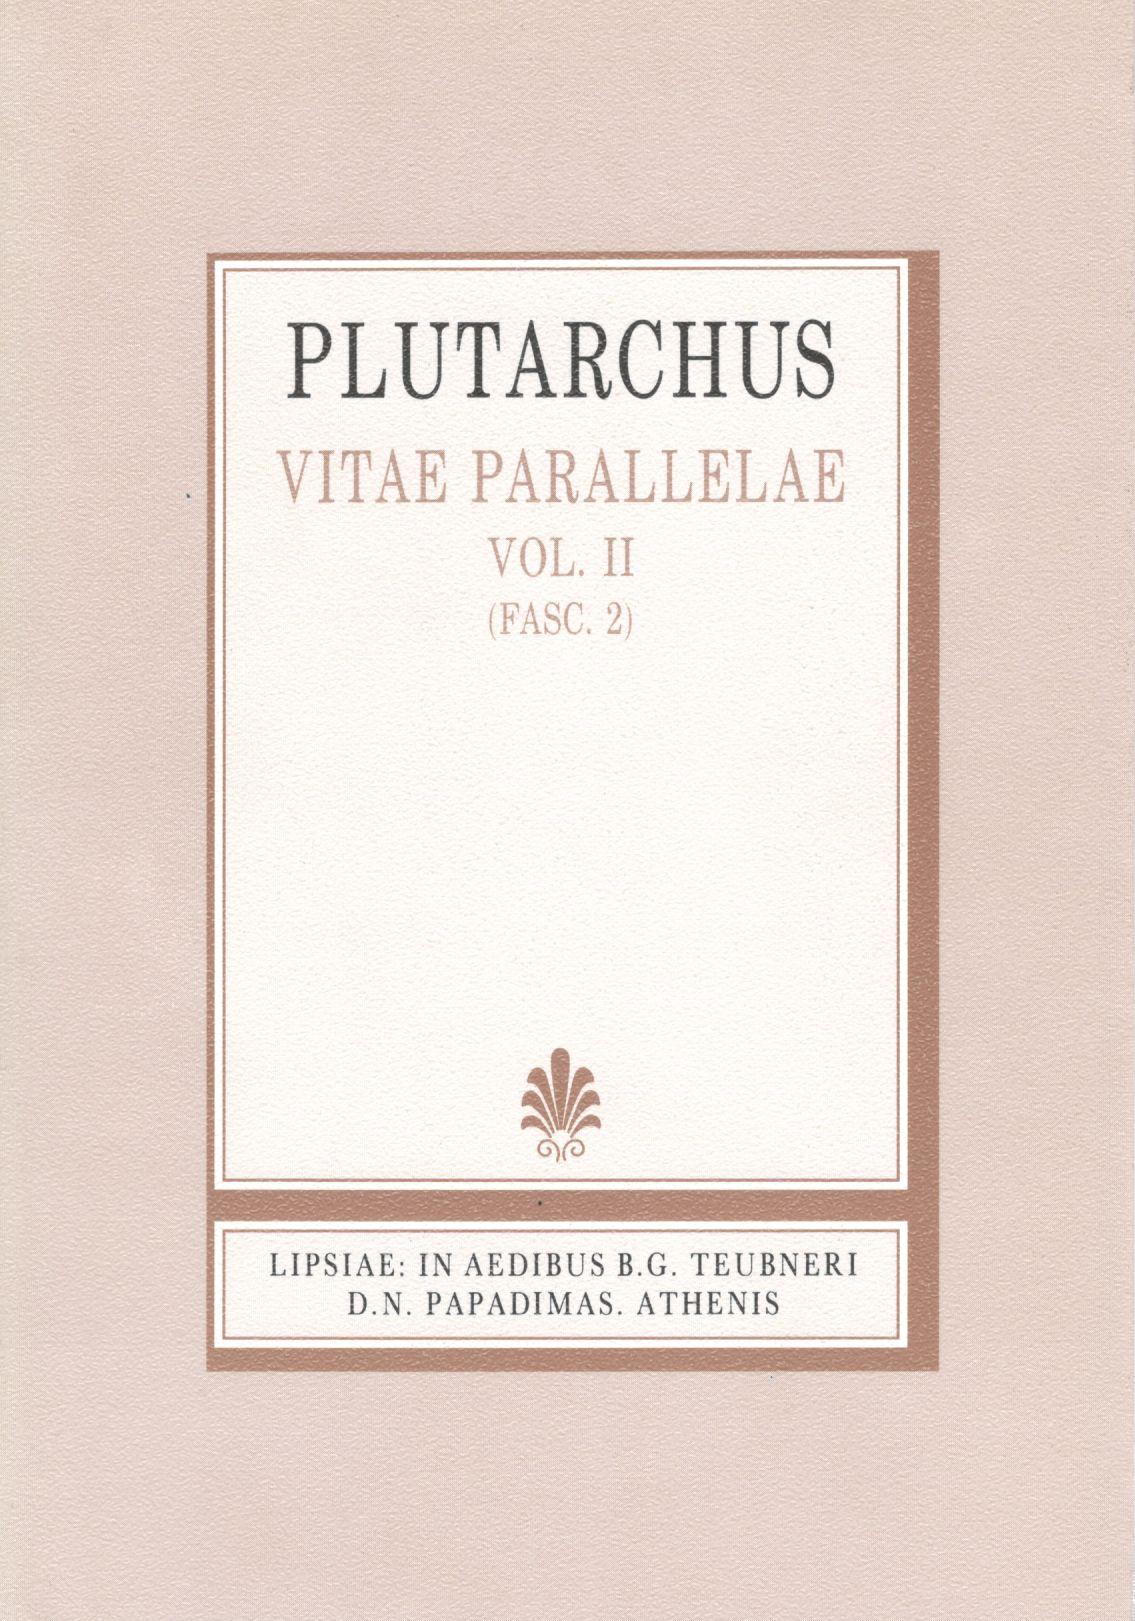 Plutarchi, Vitae Parallelae, Vol. II, (Fasc. 2), [Πλουτάρχου, Βίοι Παράλληλοι, τ. Β